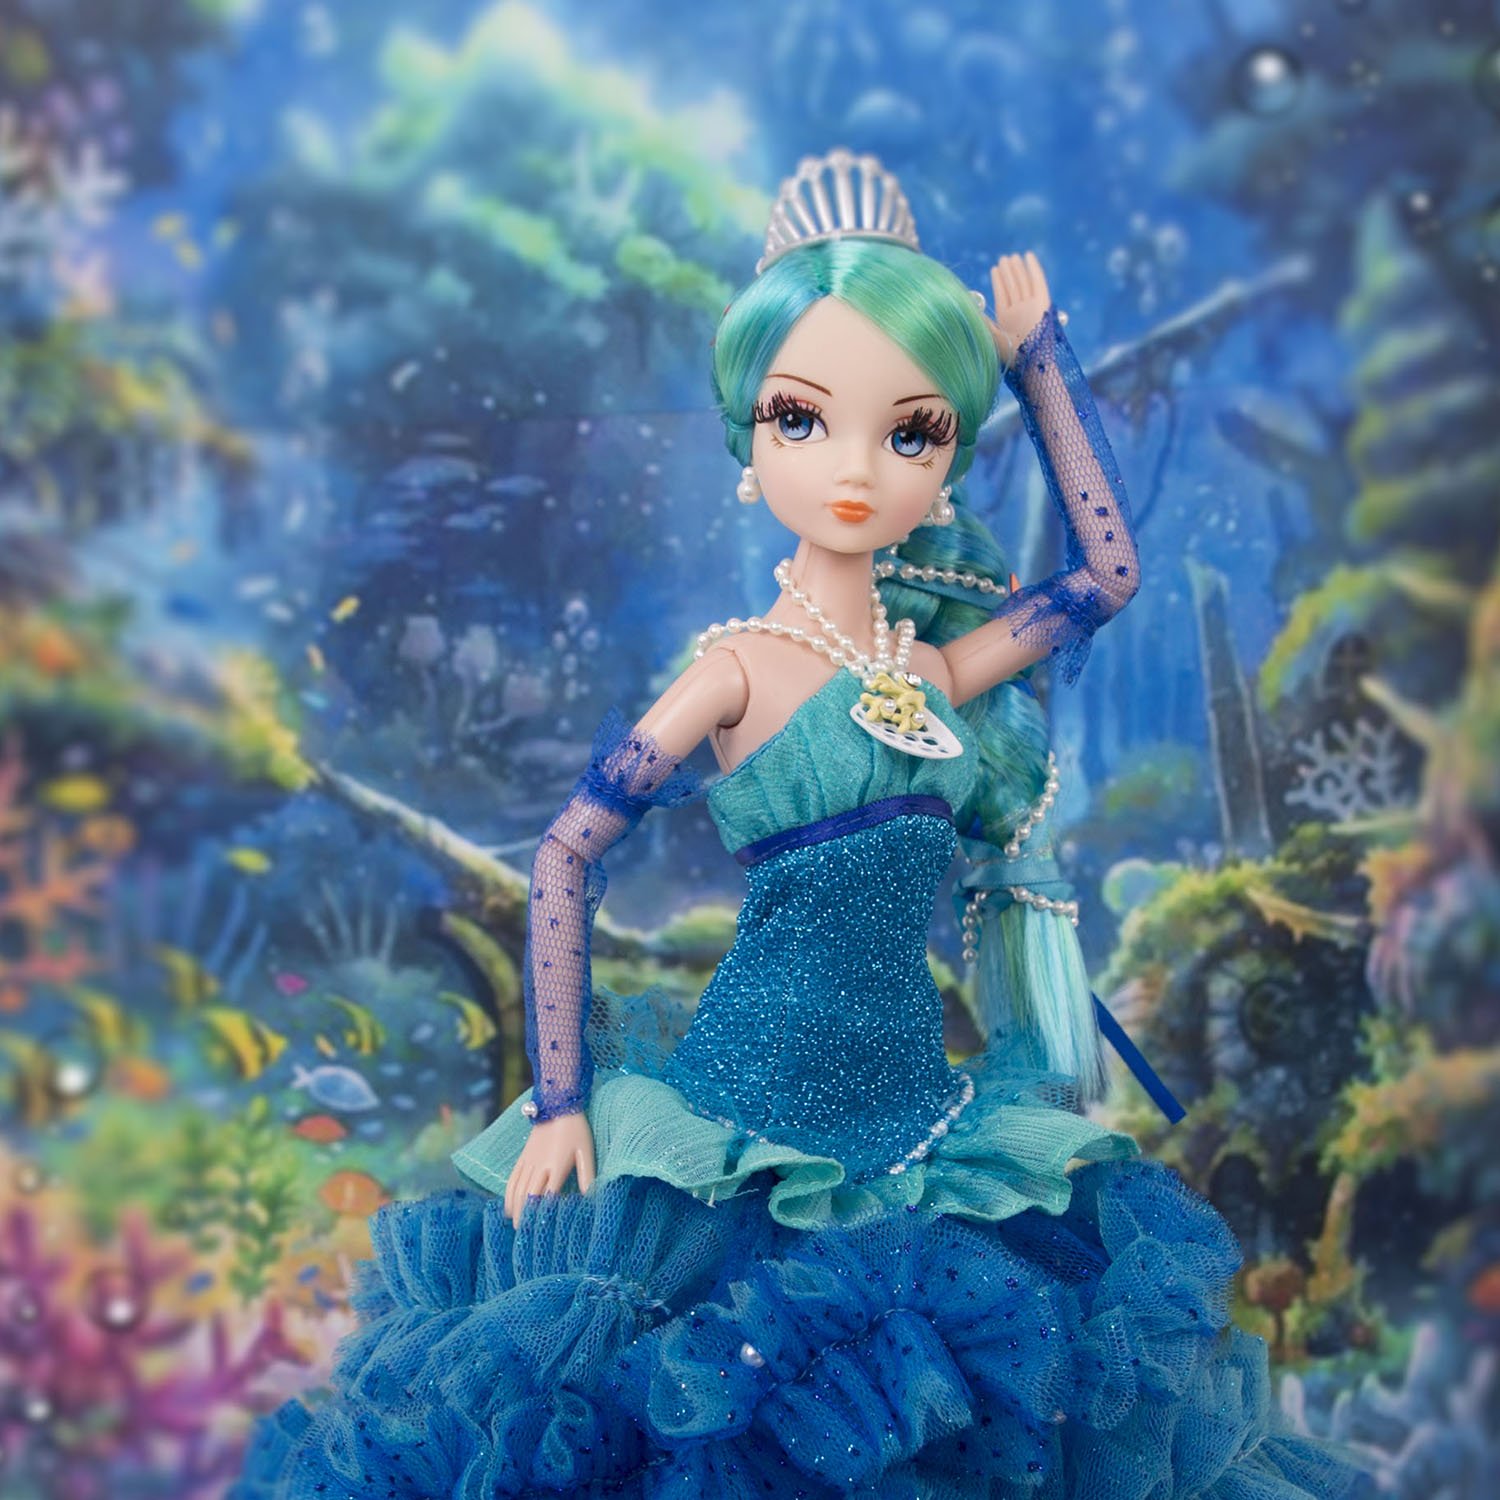 Кукла Sonyа Rose Золотая коллекция Морская принцесса